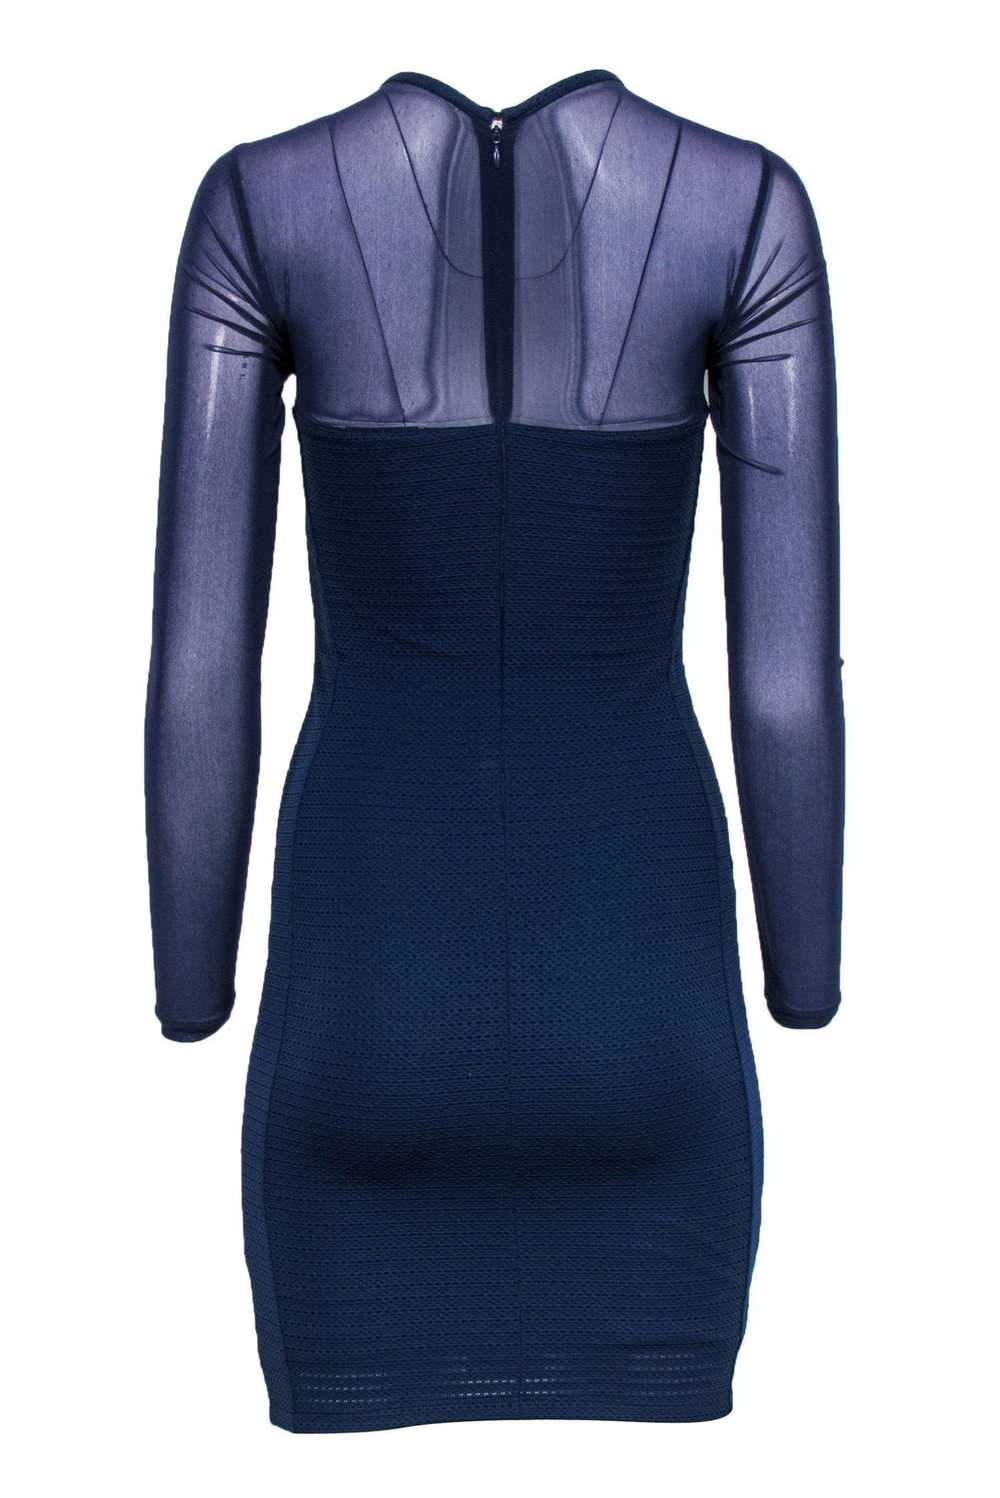 Reiss - Navy Textured Bodycon Dress w/ Mesh Sleev… - image 3